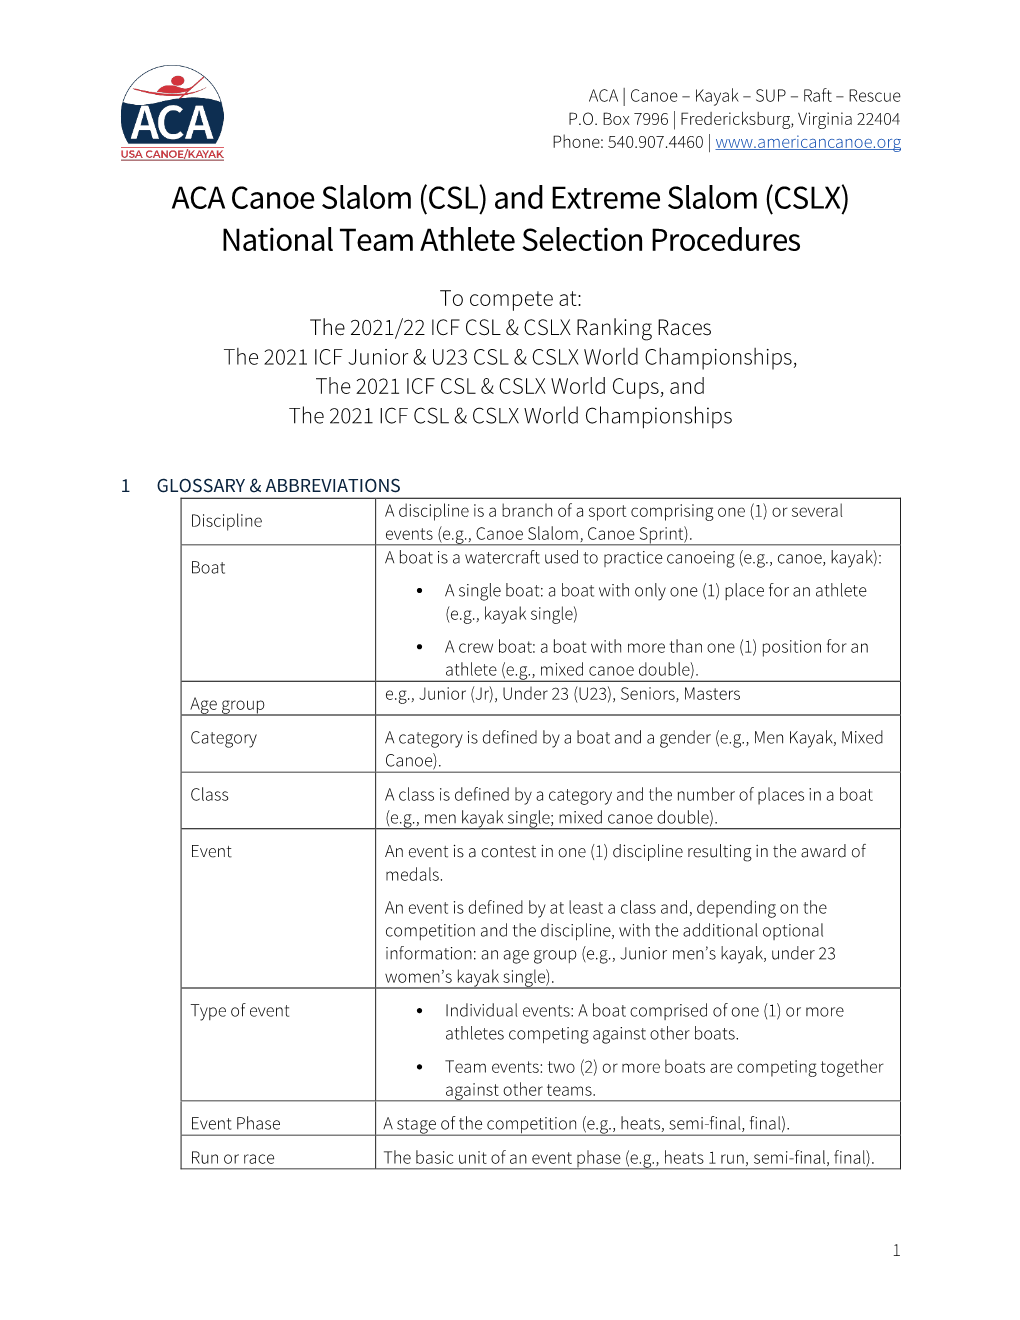 ACA Canoe Slalom (CSL) and Extreme Slalom (CSLX) National Team Athlete Selection Procedures